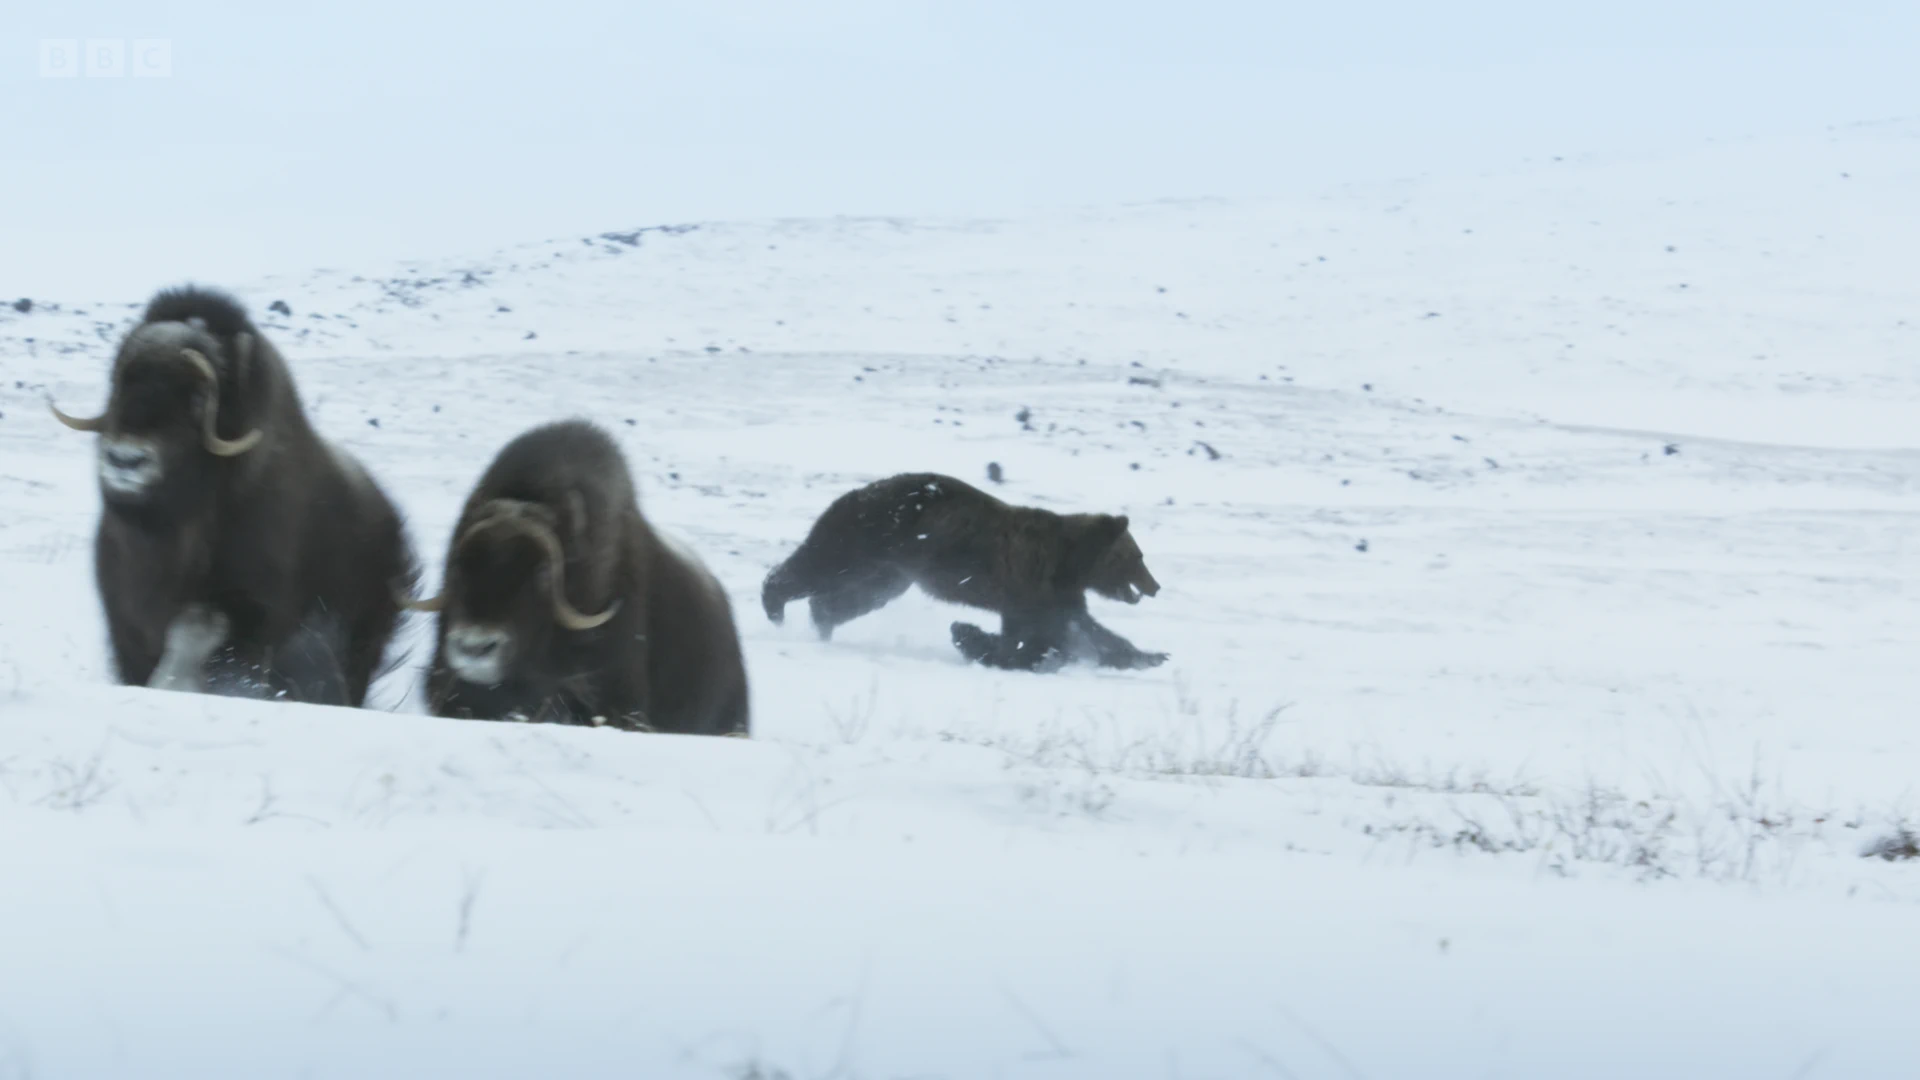 Grizzly bear (Ursus arctos horribilis) as shown in Frozen Planet II - Frozen Worlds